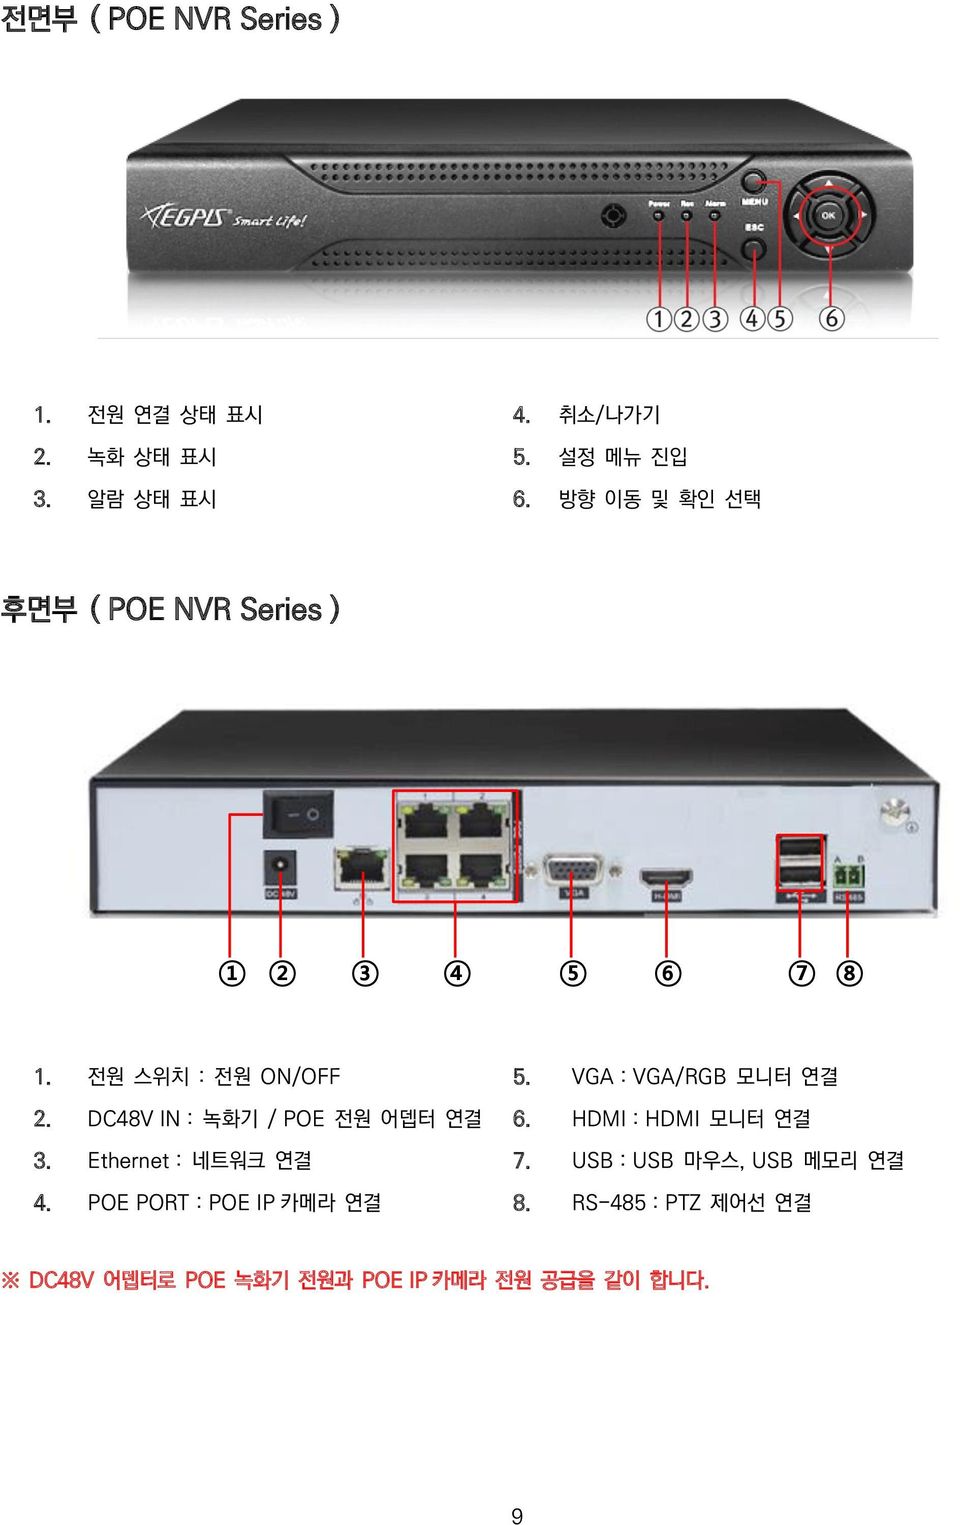 VGA : VGA/RGB 모니터 연결 2. DC48V IN : 녹화기 / POE 전원 어뎁터 연결 6. HDMI : HDMI 모니터 연결 3.